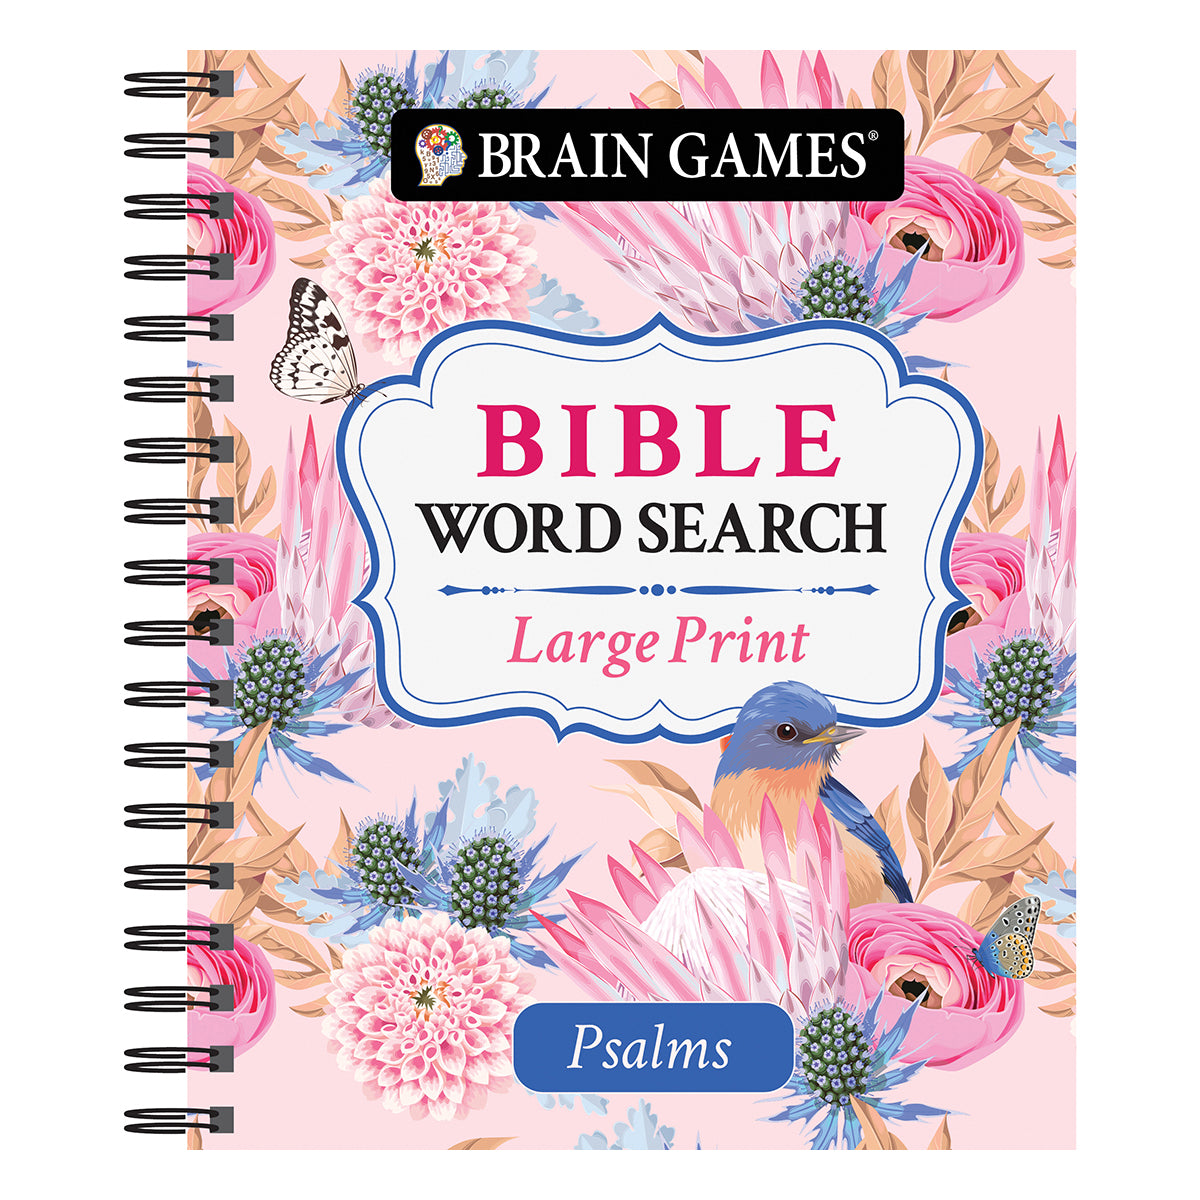 Brain Games  Large Print Bible Word Search Psalms